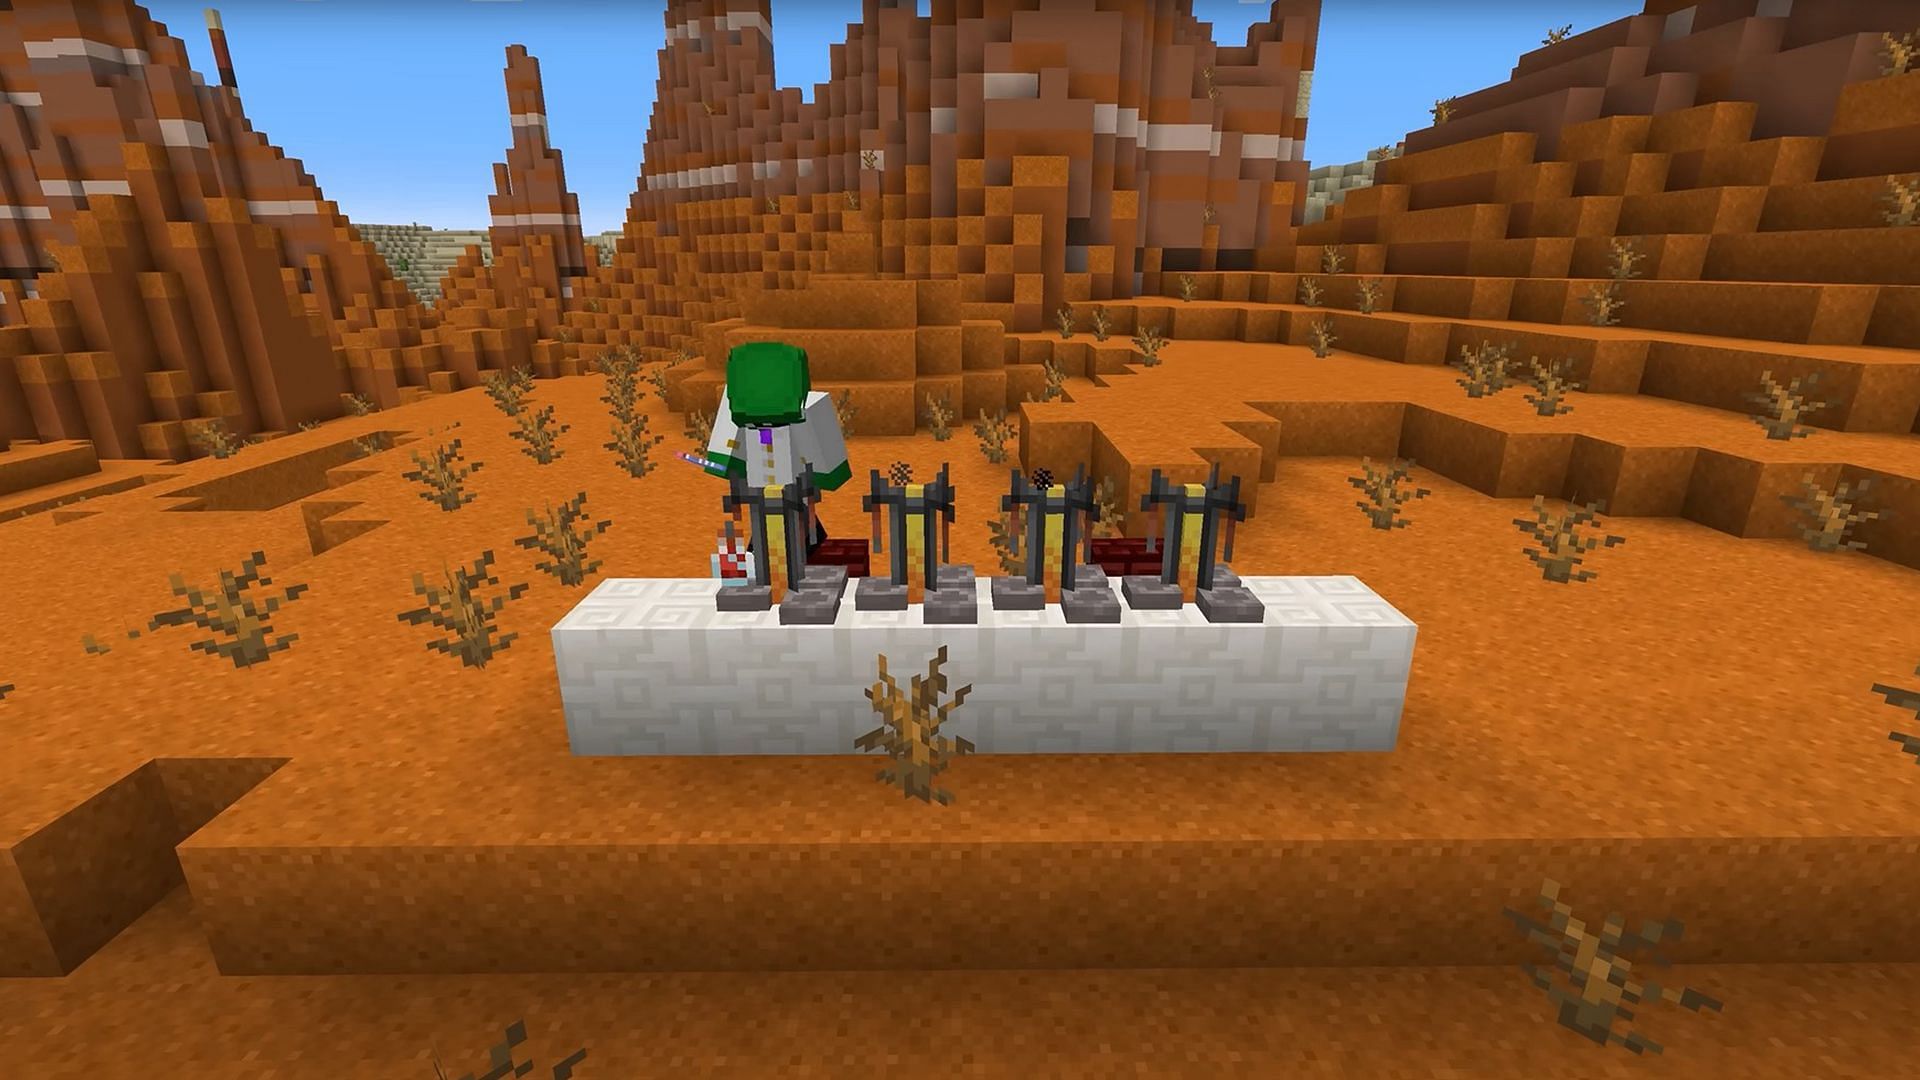 Minecraft Trails & Tales Build Explore Create Water Bottle